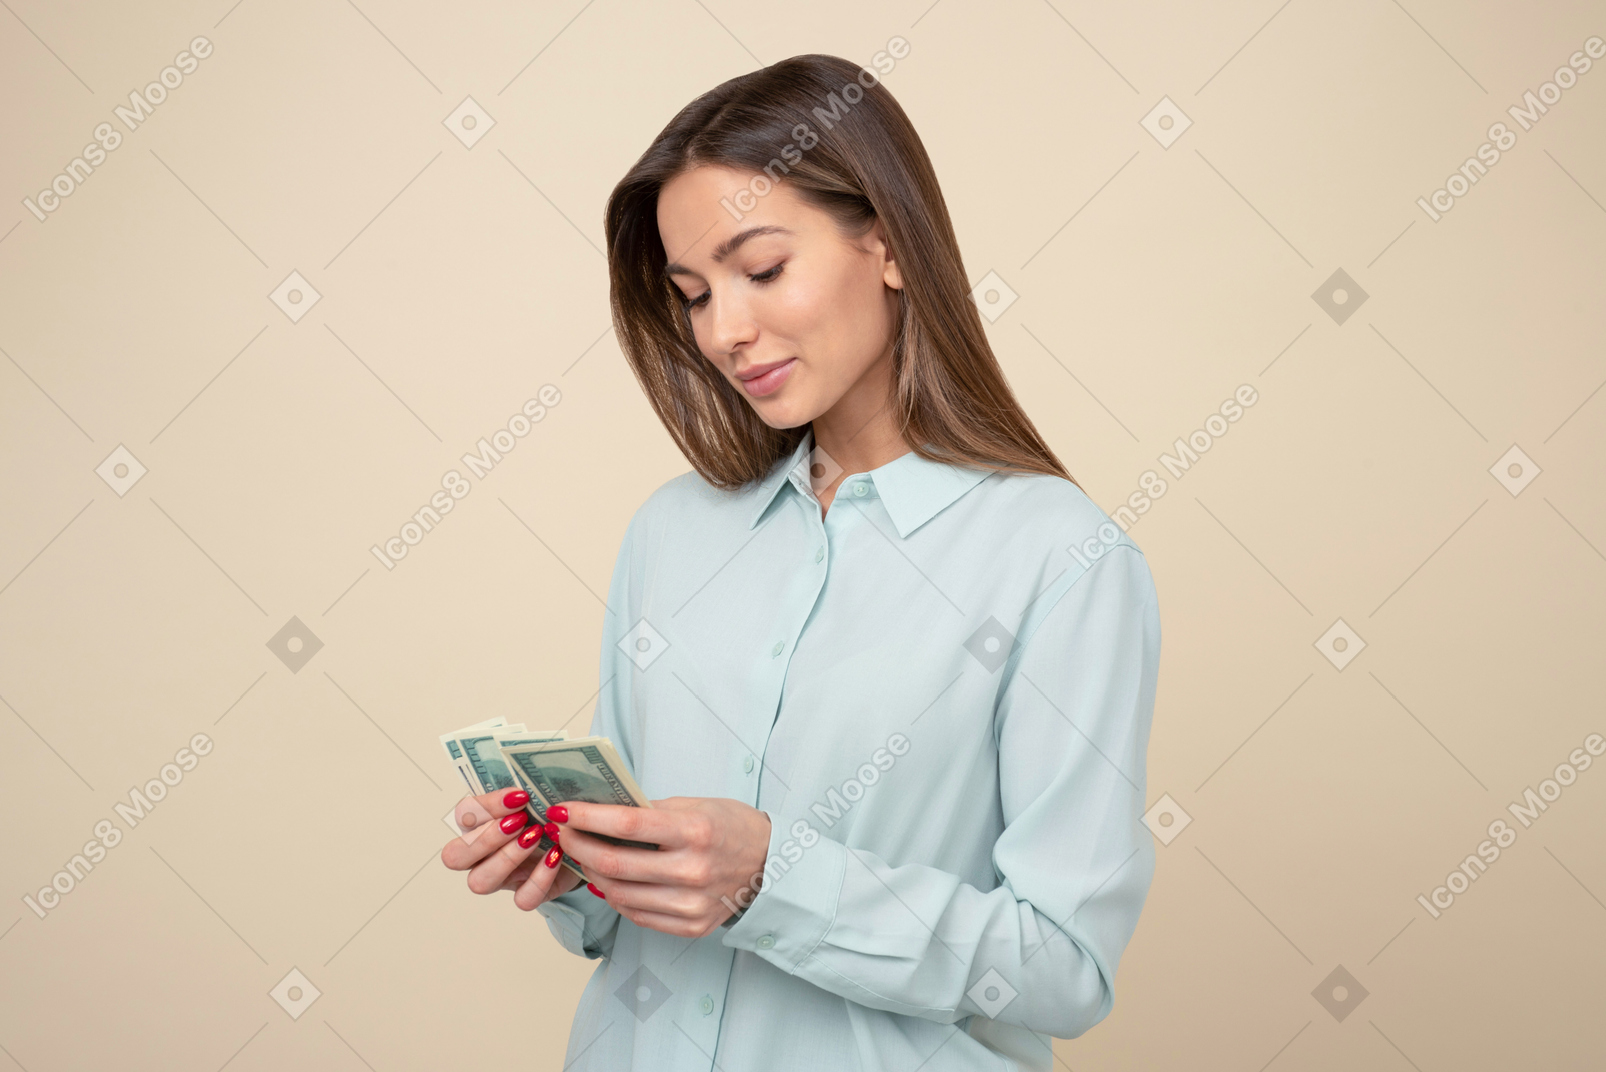 Attractive woman counting dollar bills